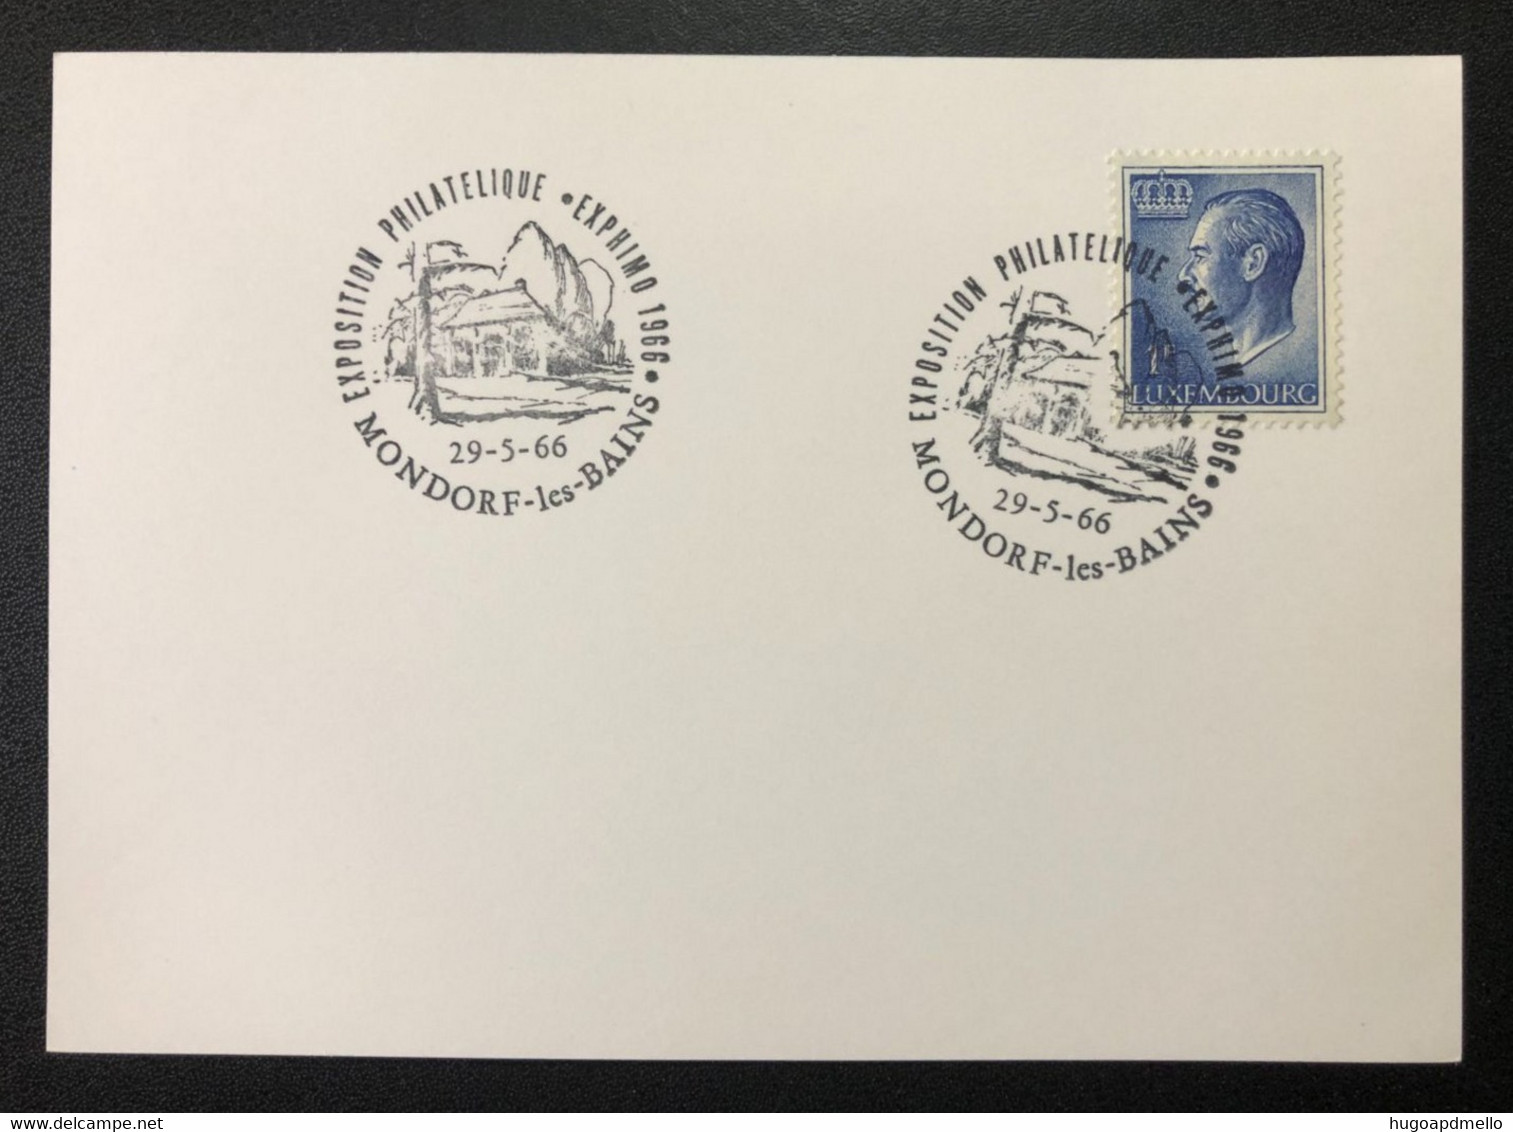 LUXEMBOURG, « MONDORF LES BAINS », « Exposition Philatélique - EXPHIMO 1966»,  With Special Postmark, 1966 - Briefe U. Dokumente